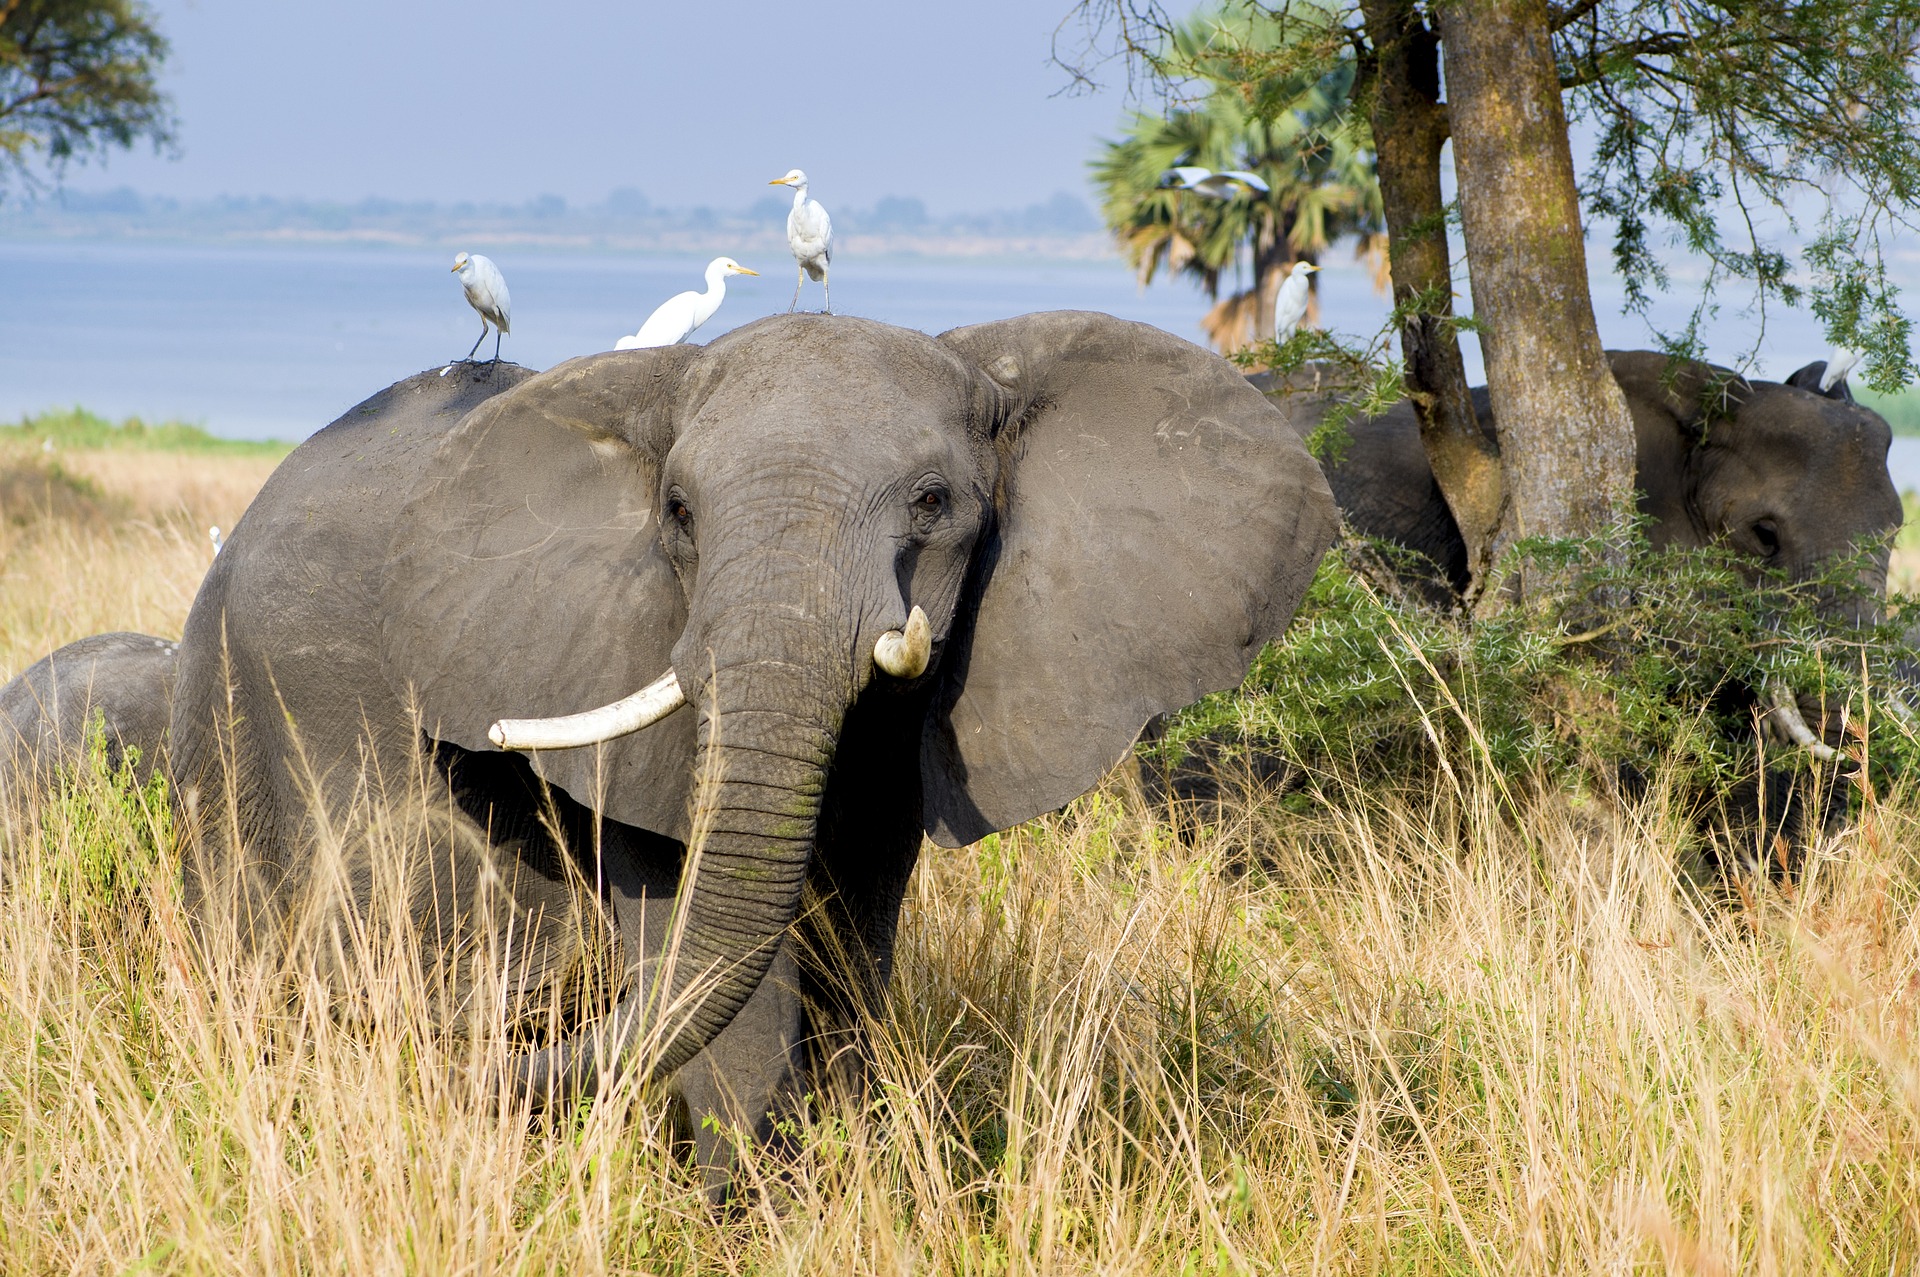 Elephant in Murchison Falls National Park, Uganda